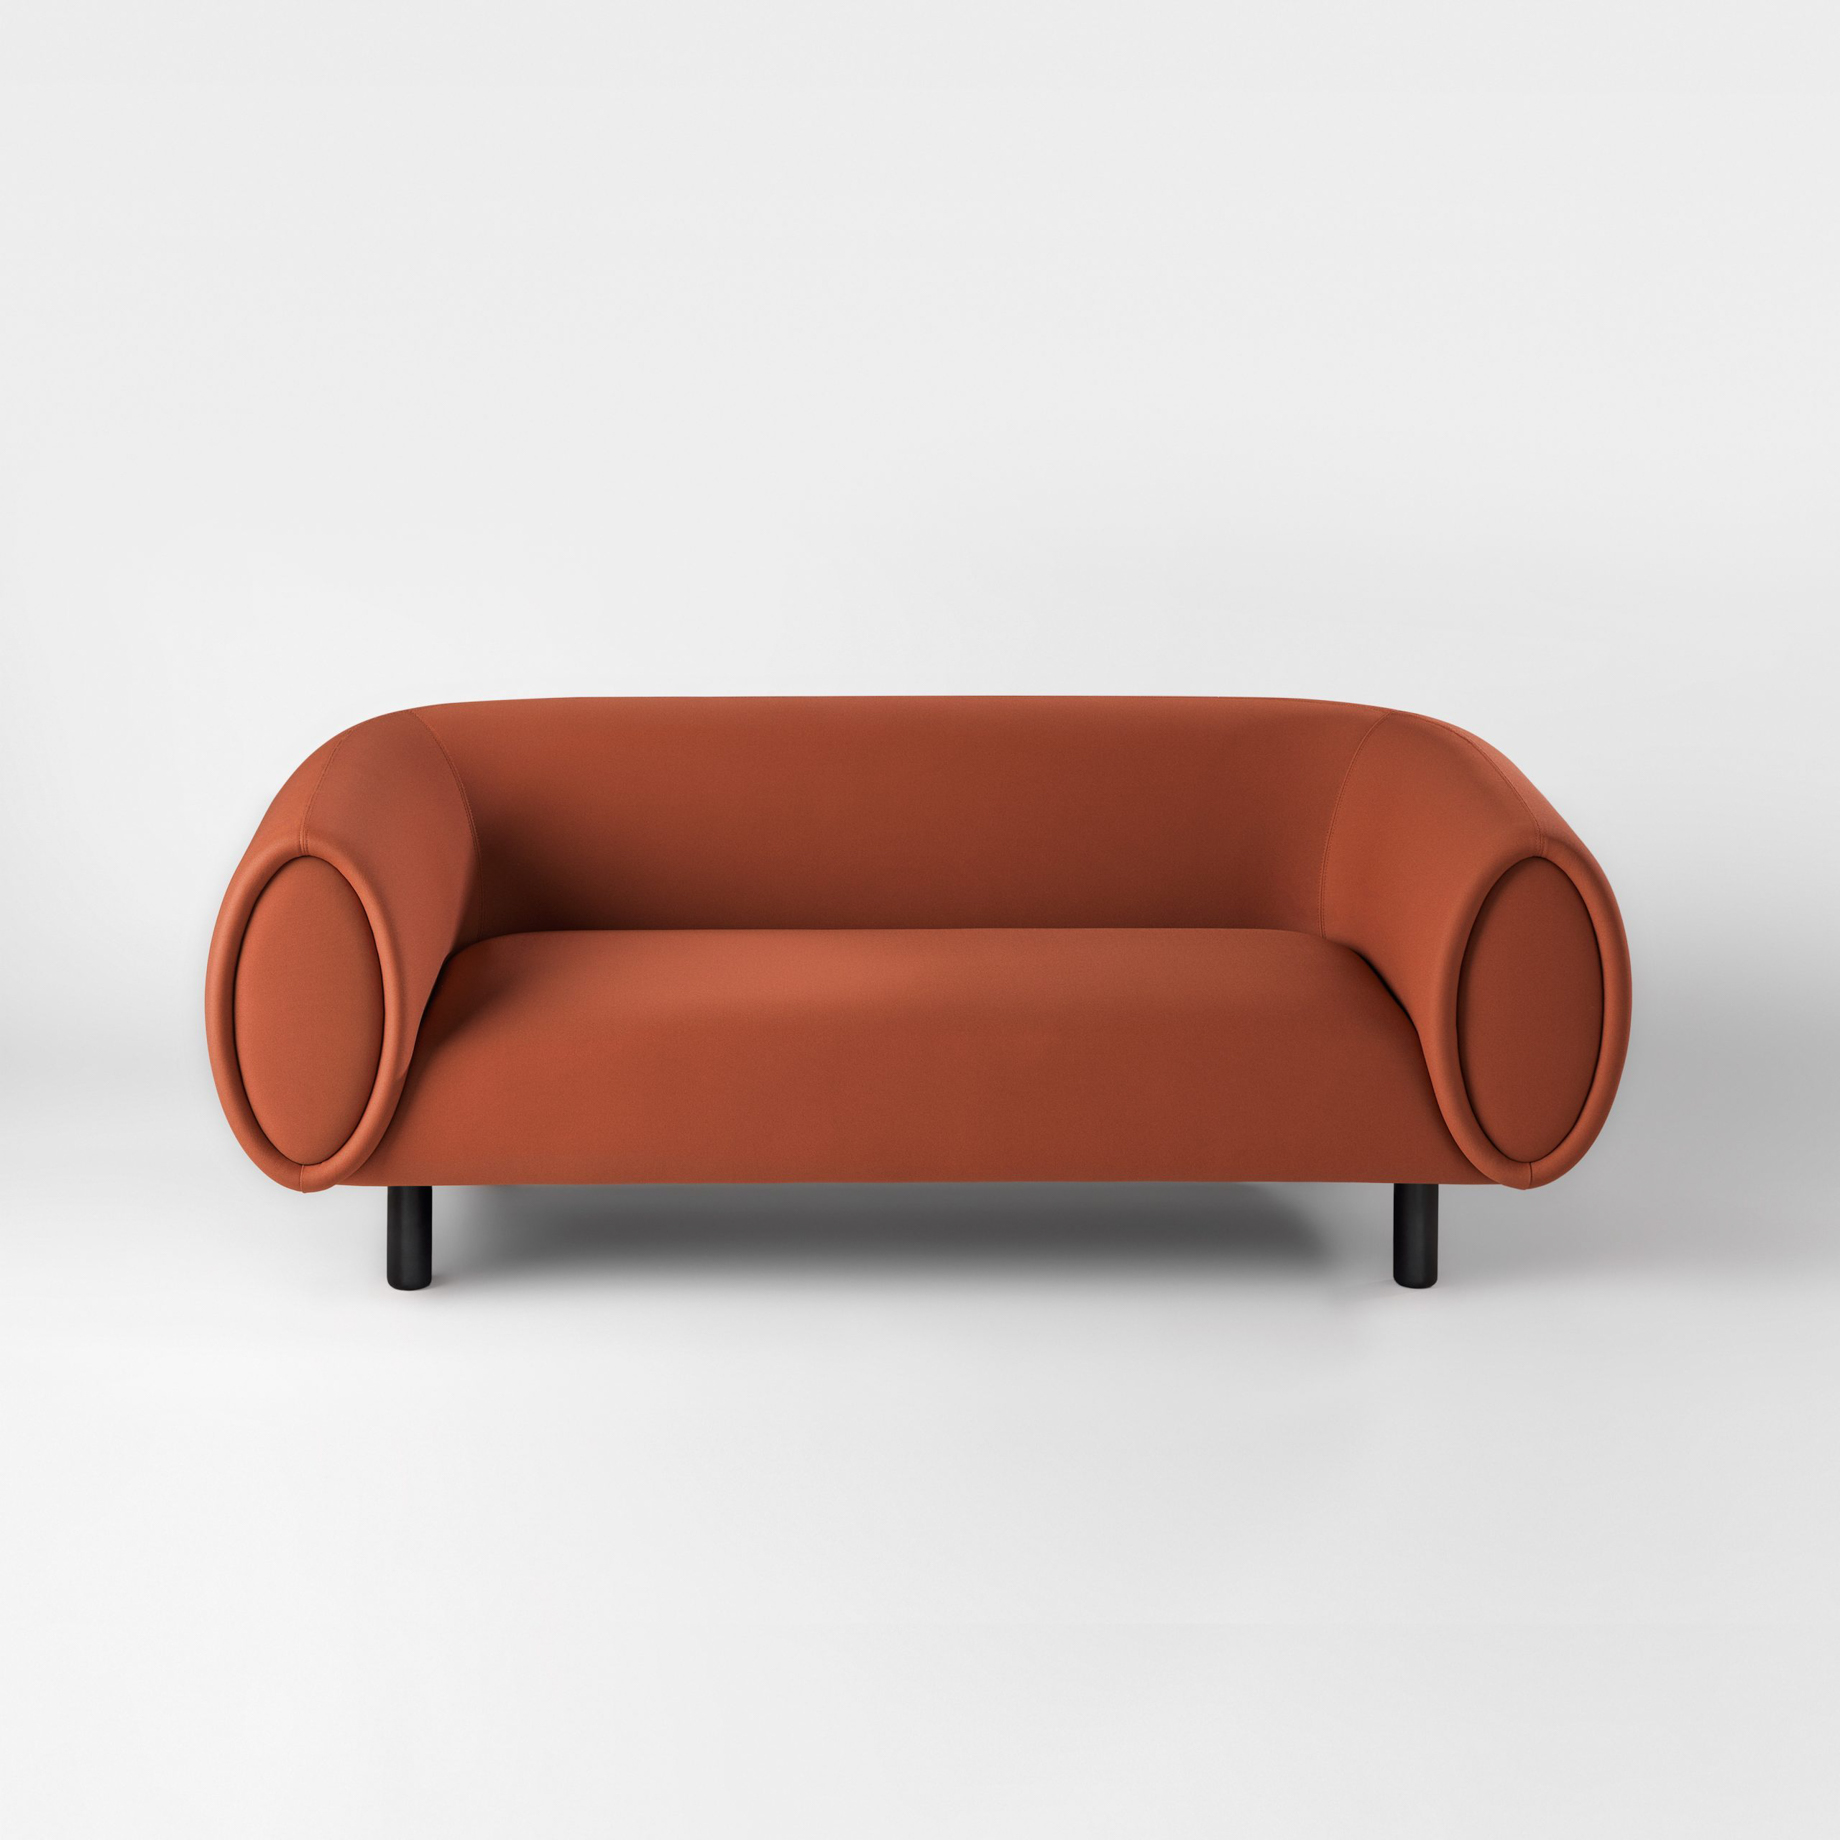 Iconic Tobi Sofa Designed with Zen Garden Principles by Rexite Italy - Elena Trevisan